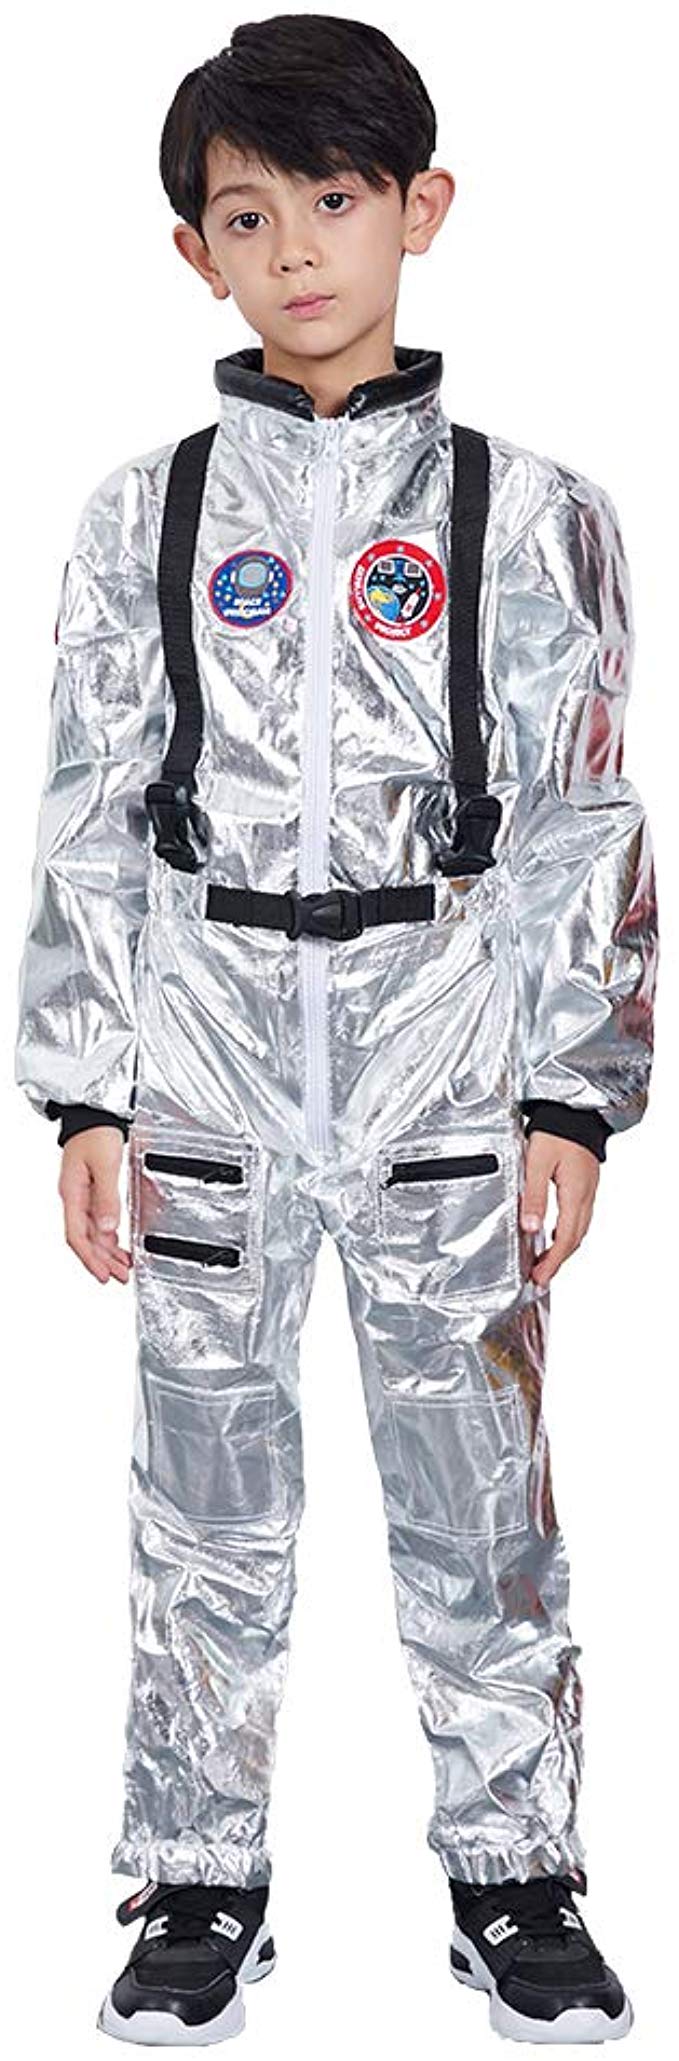 Megartico Kids Astronaut Suit Space Pilot Costume